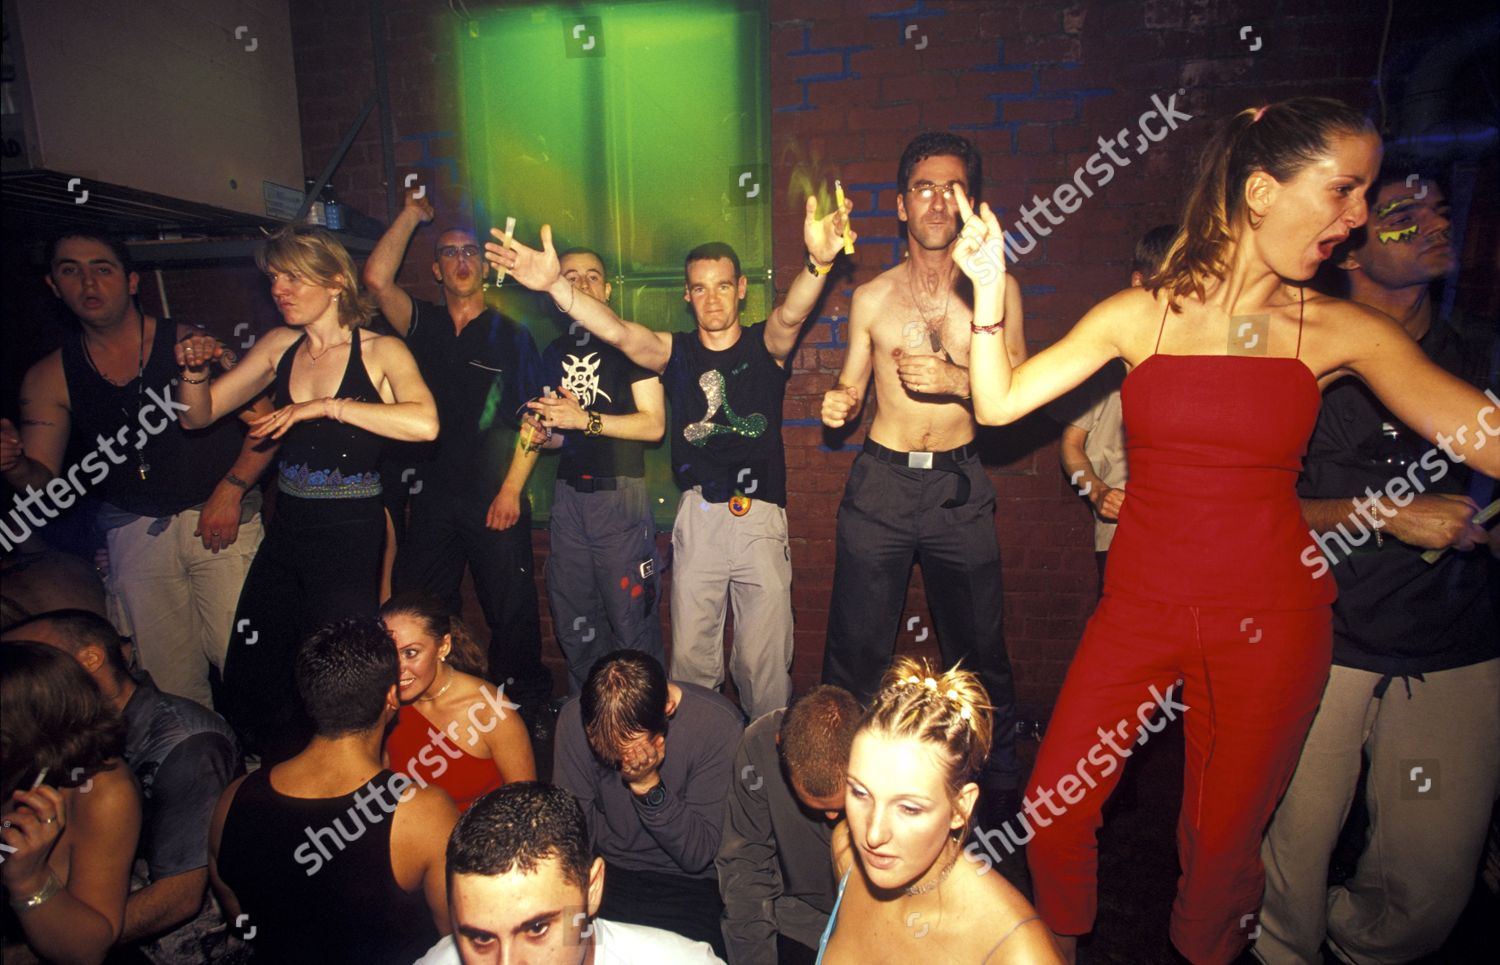 Crowd People Dance Night Club Cream Editorial Stock Photo - Stock Image |  Shutterstock